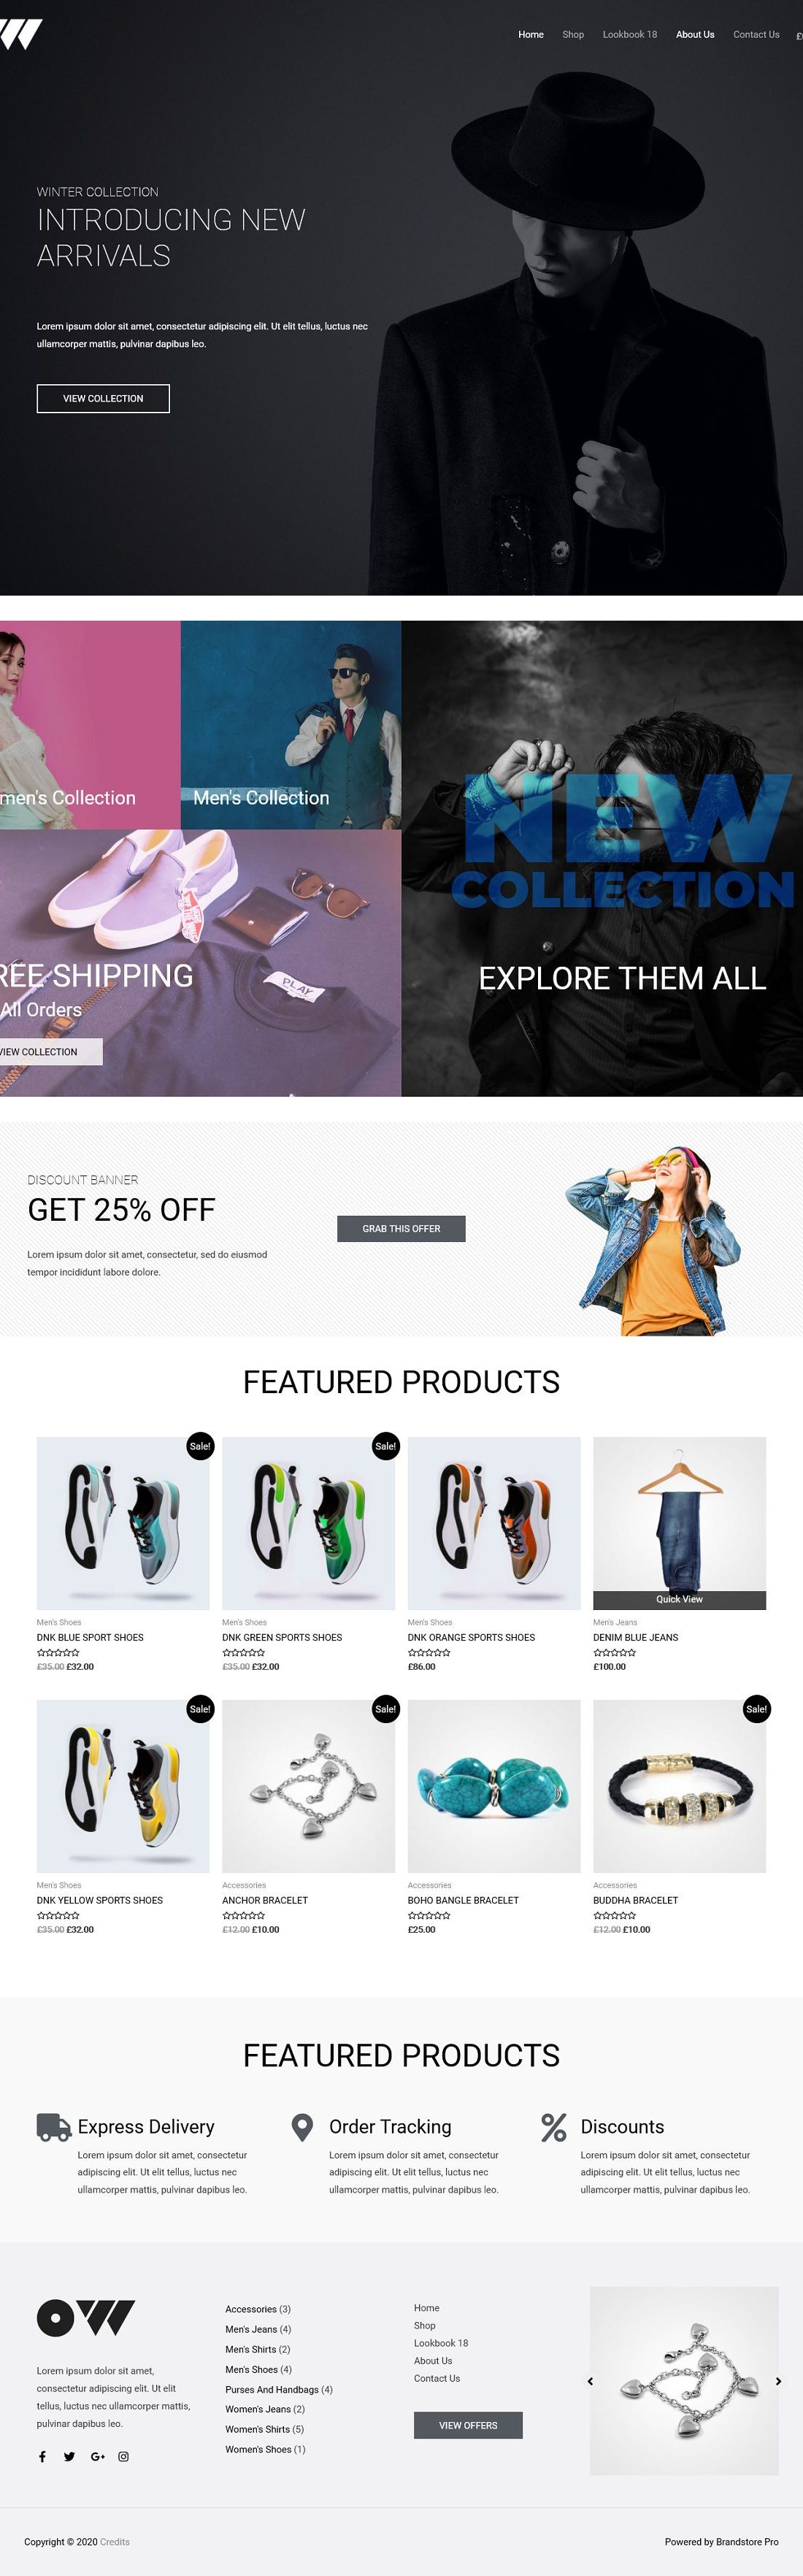 eCom Brandstore Pro A Shop - Multipurpose - Home Page 1280 x 3528